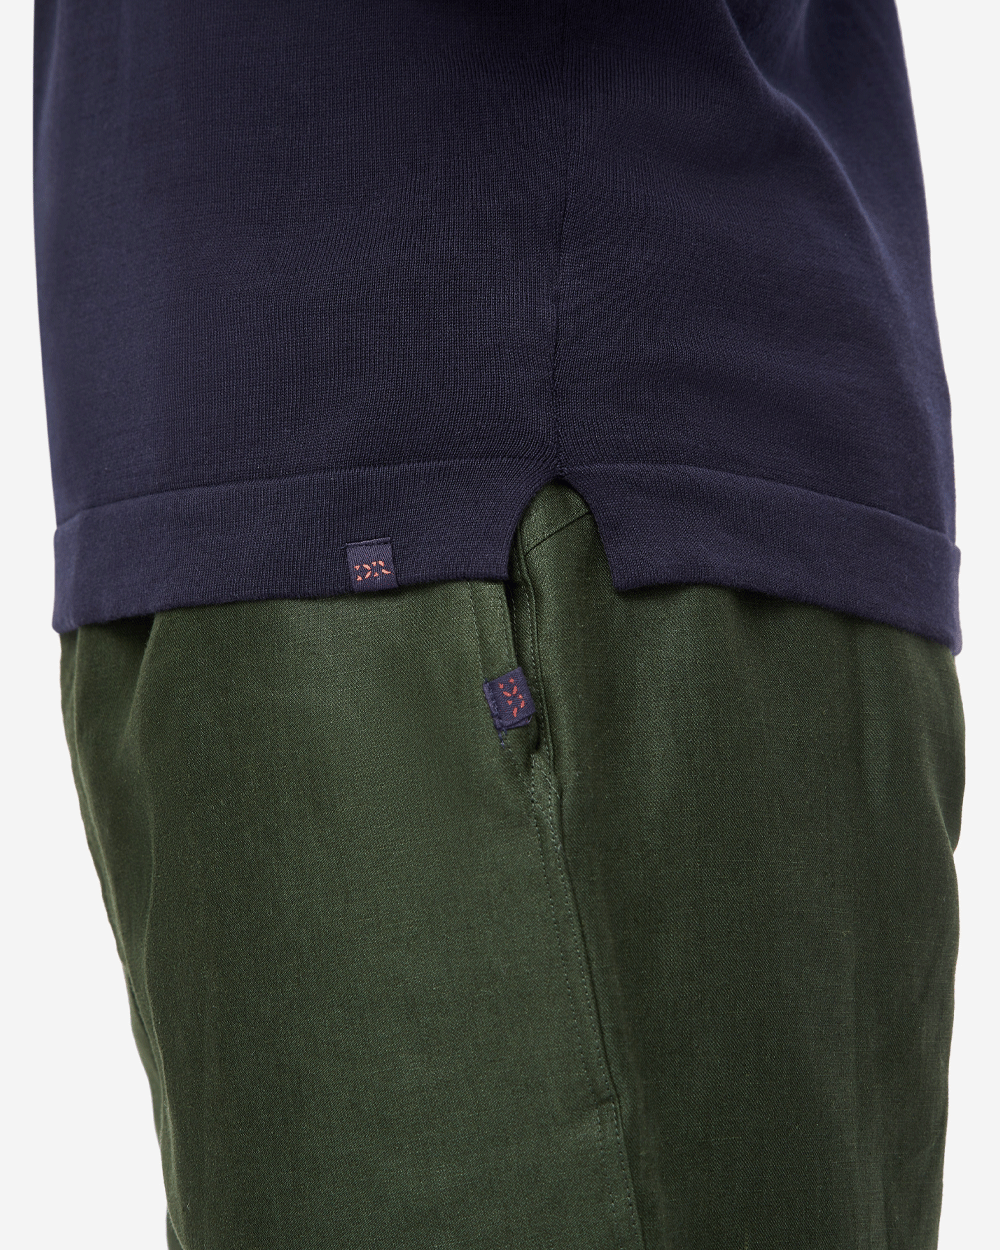 Navy Sea Island Cotton Short Sleeve Polo